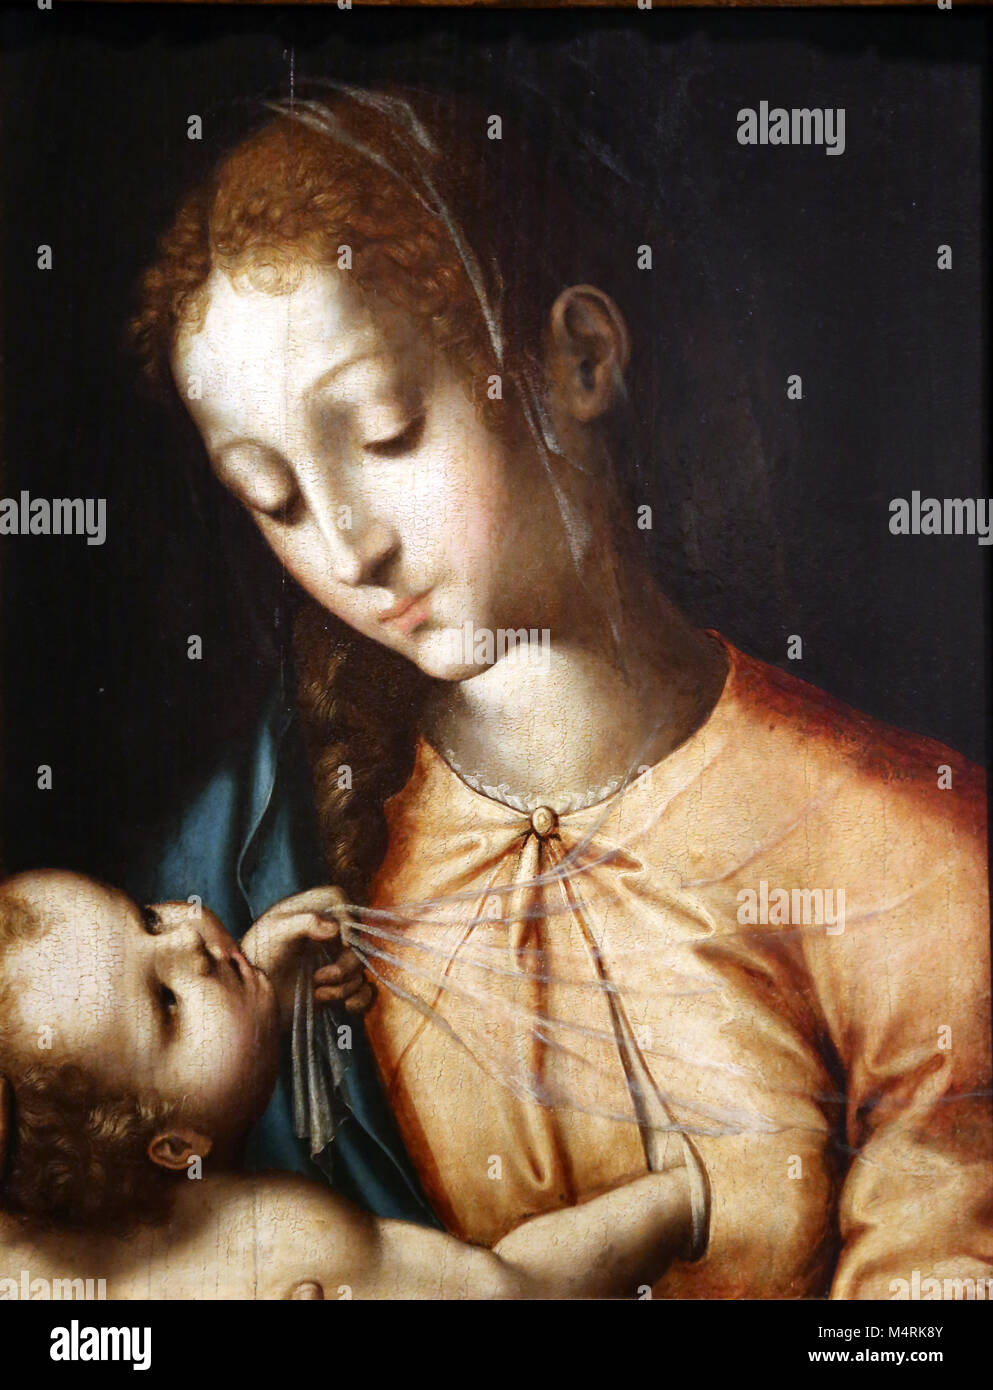 Virgin and child scene (1560-1570), painted by Luis de Morales (1512-1586). Oil on Panel. Museu Nacional de Arte Antiga, Lisbon. Portugal. Stock Photo